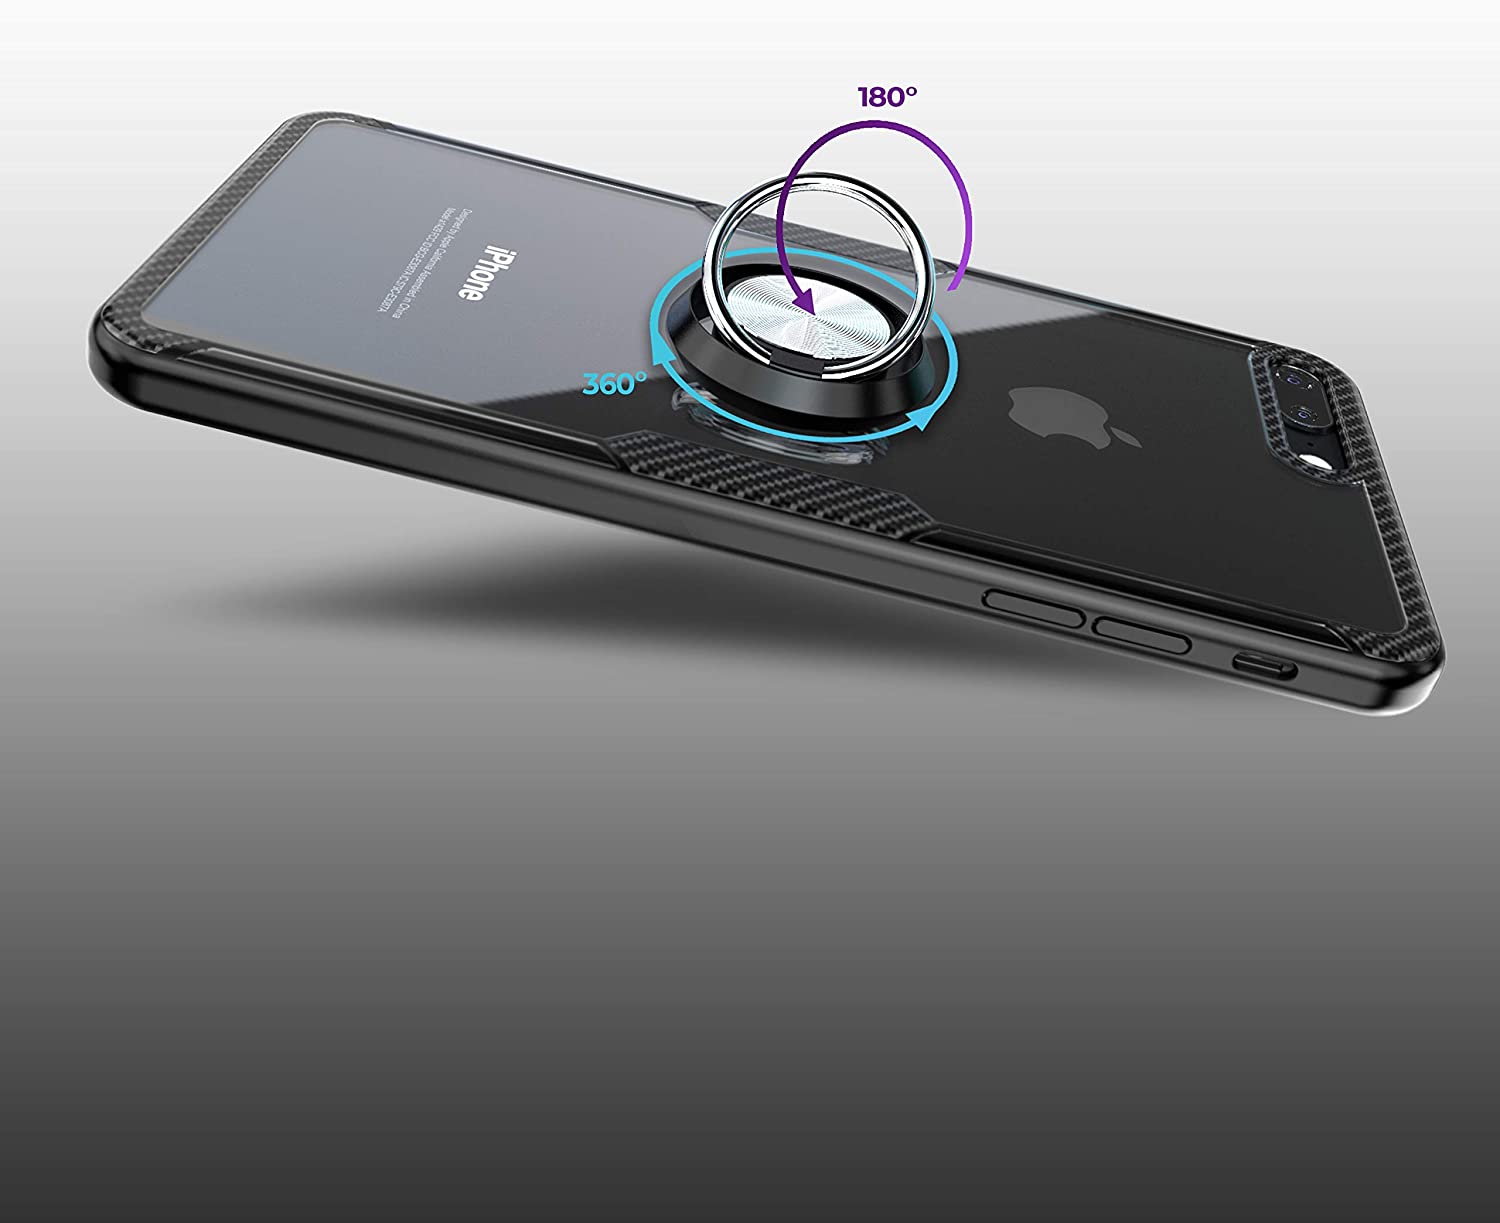 iPhone 7 Plus / iPhone 8 Plus Case with Ring Holder Black